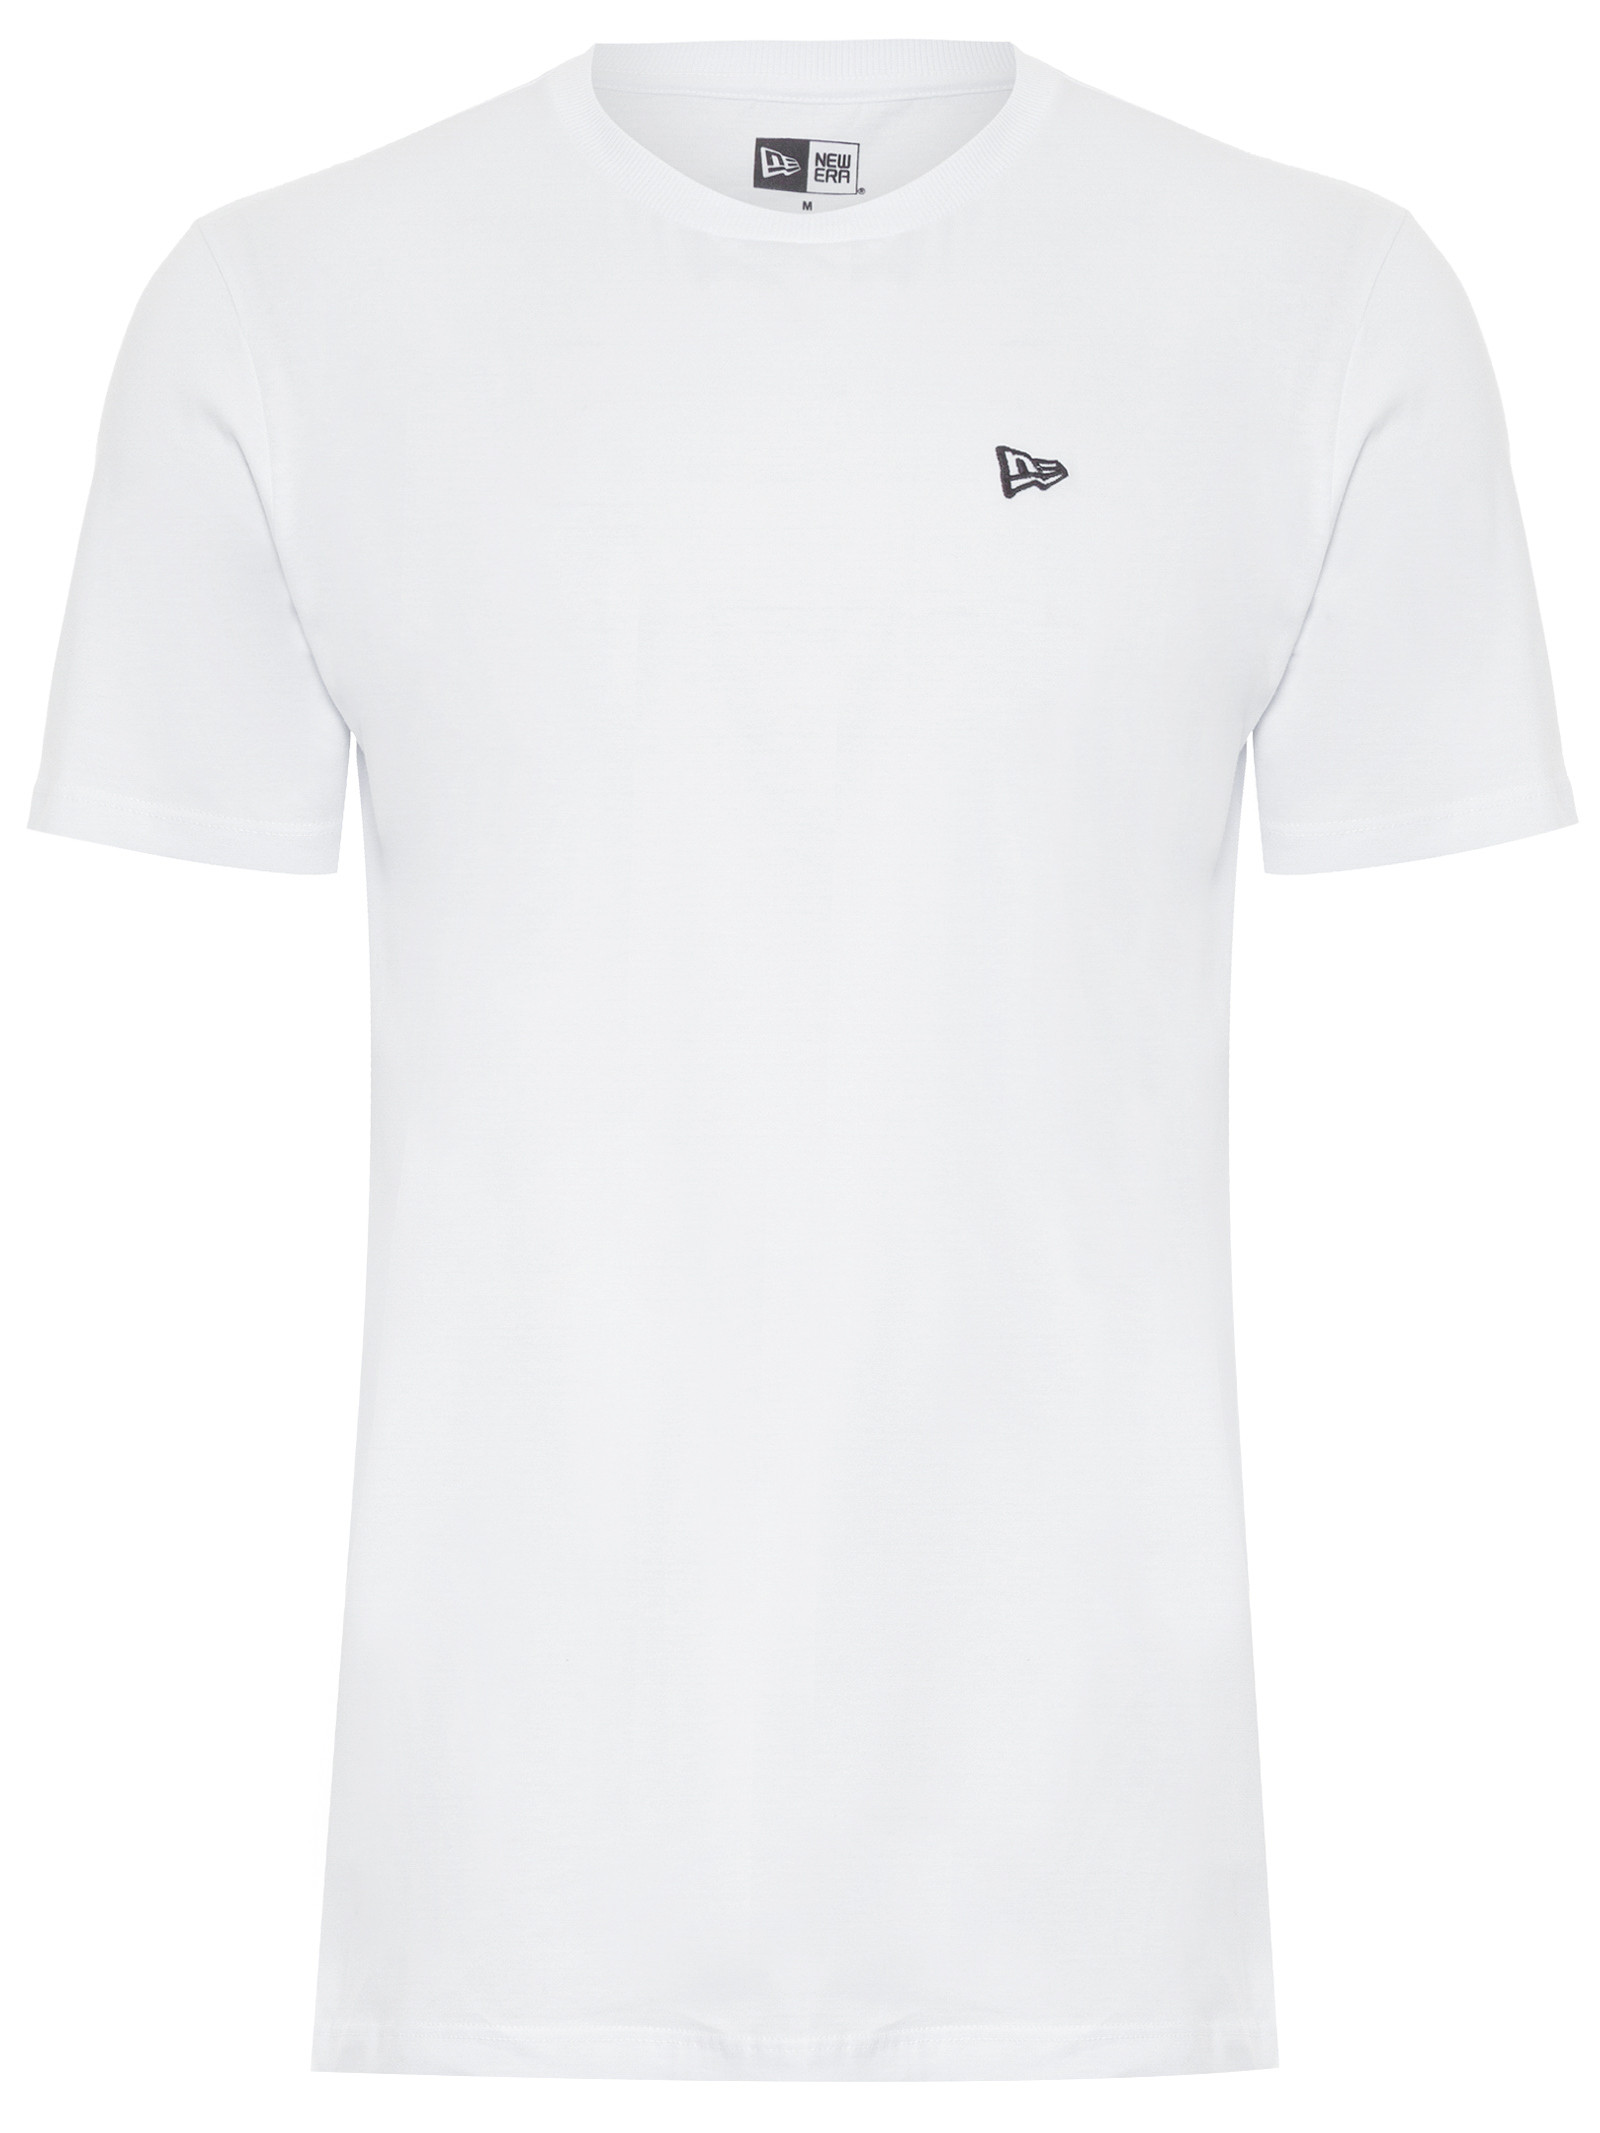 Camiseta Masculina Essentials Flag - New Era - Branco - Oqvestir